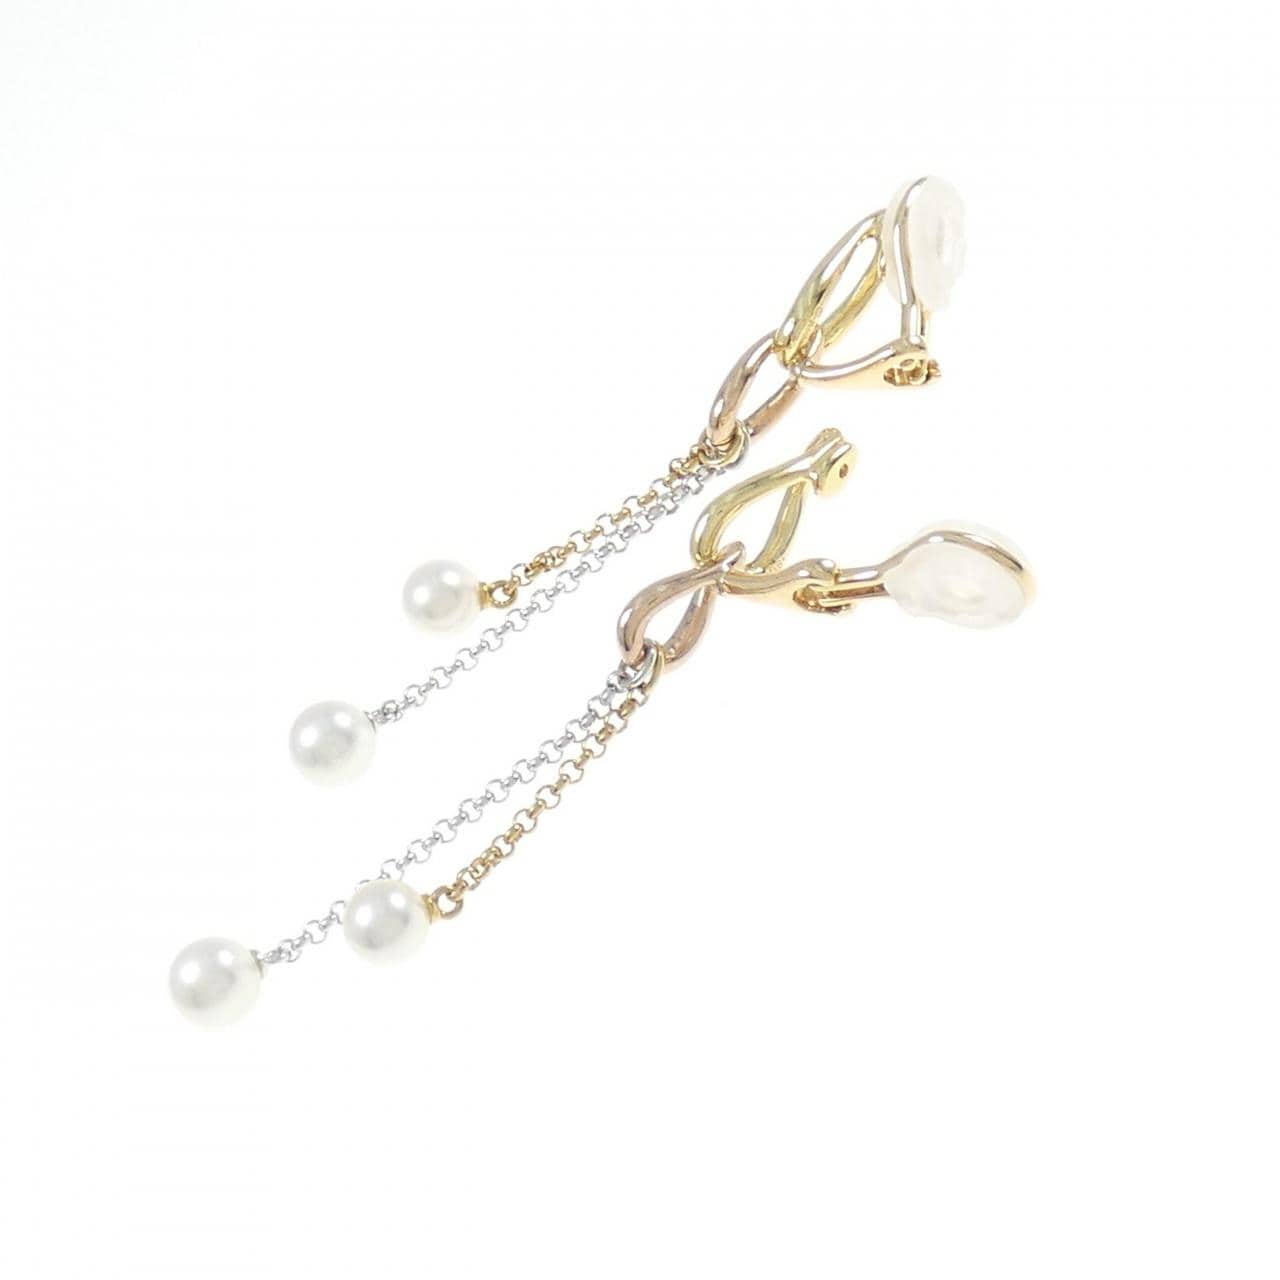 MIKIMOTO Akoya pearl earrings 5.6mm